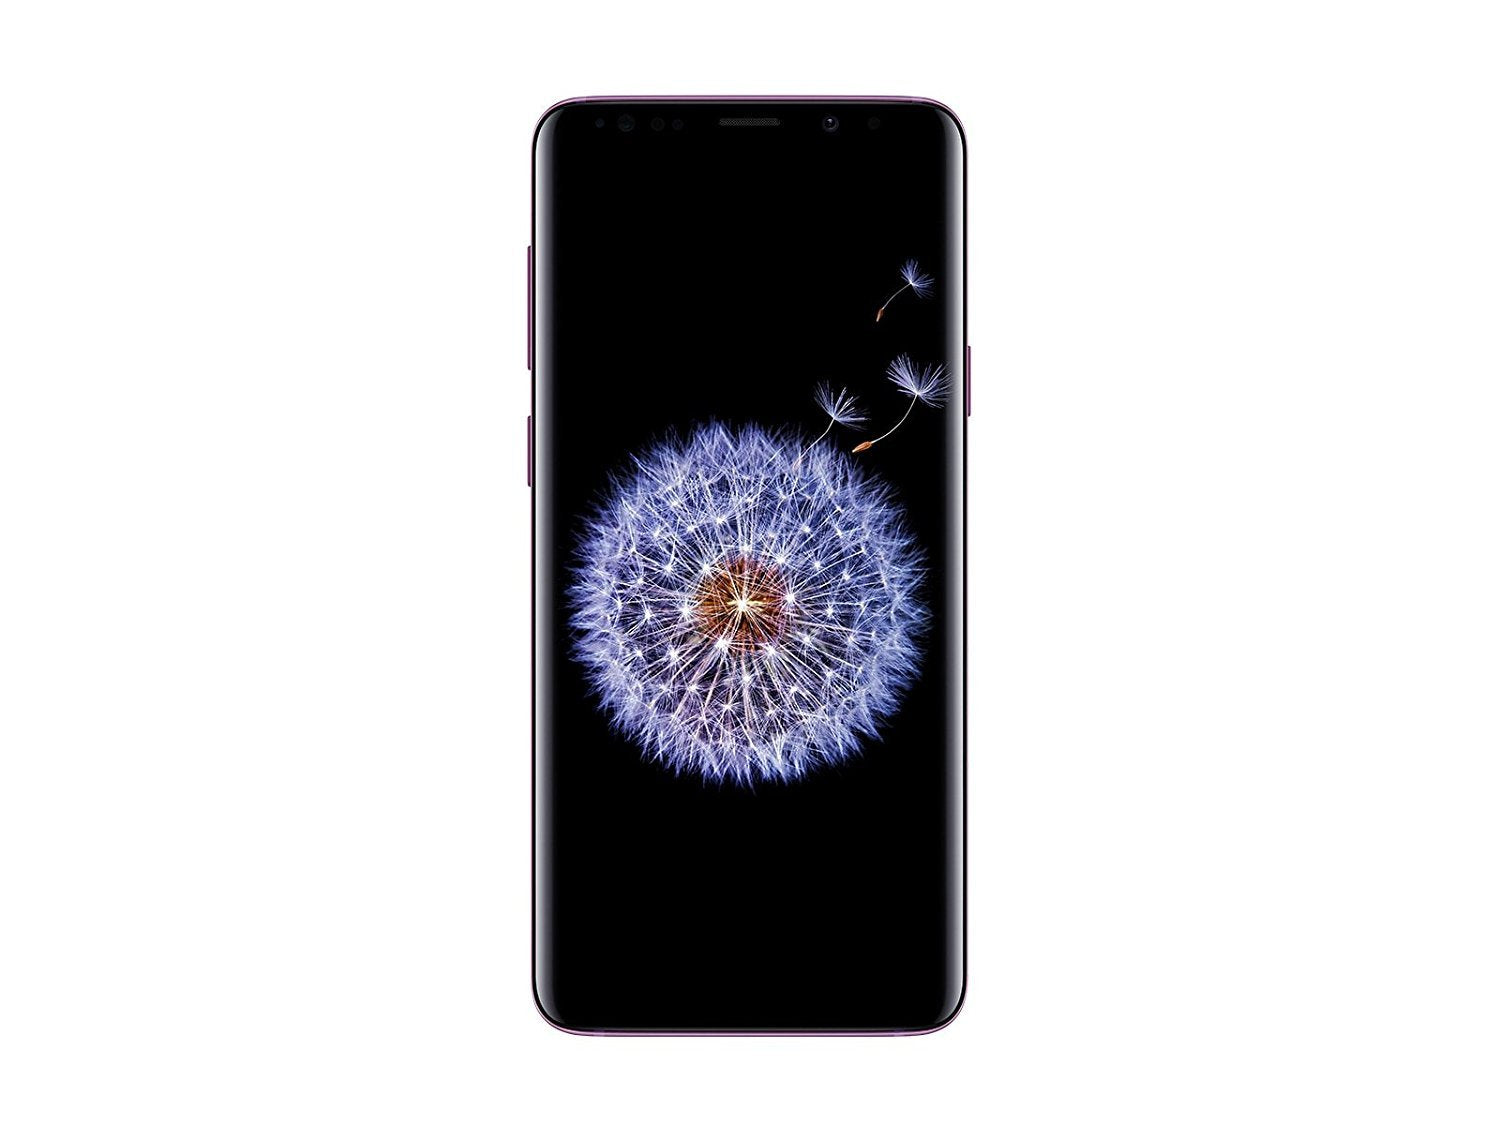 Samsung Galaxy S9+ Unlocked Smartphone - Lilac Purple - US Warranty